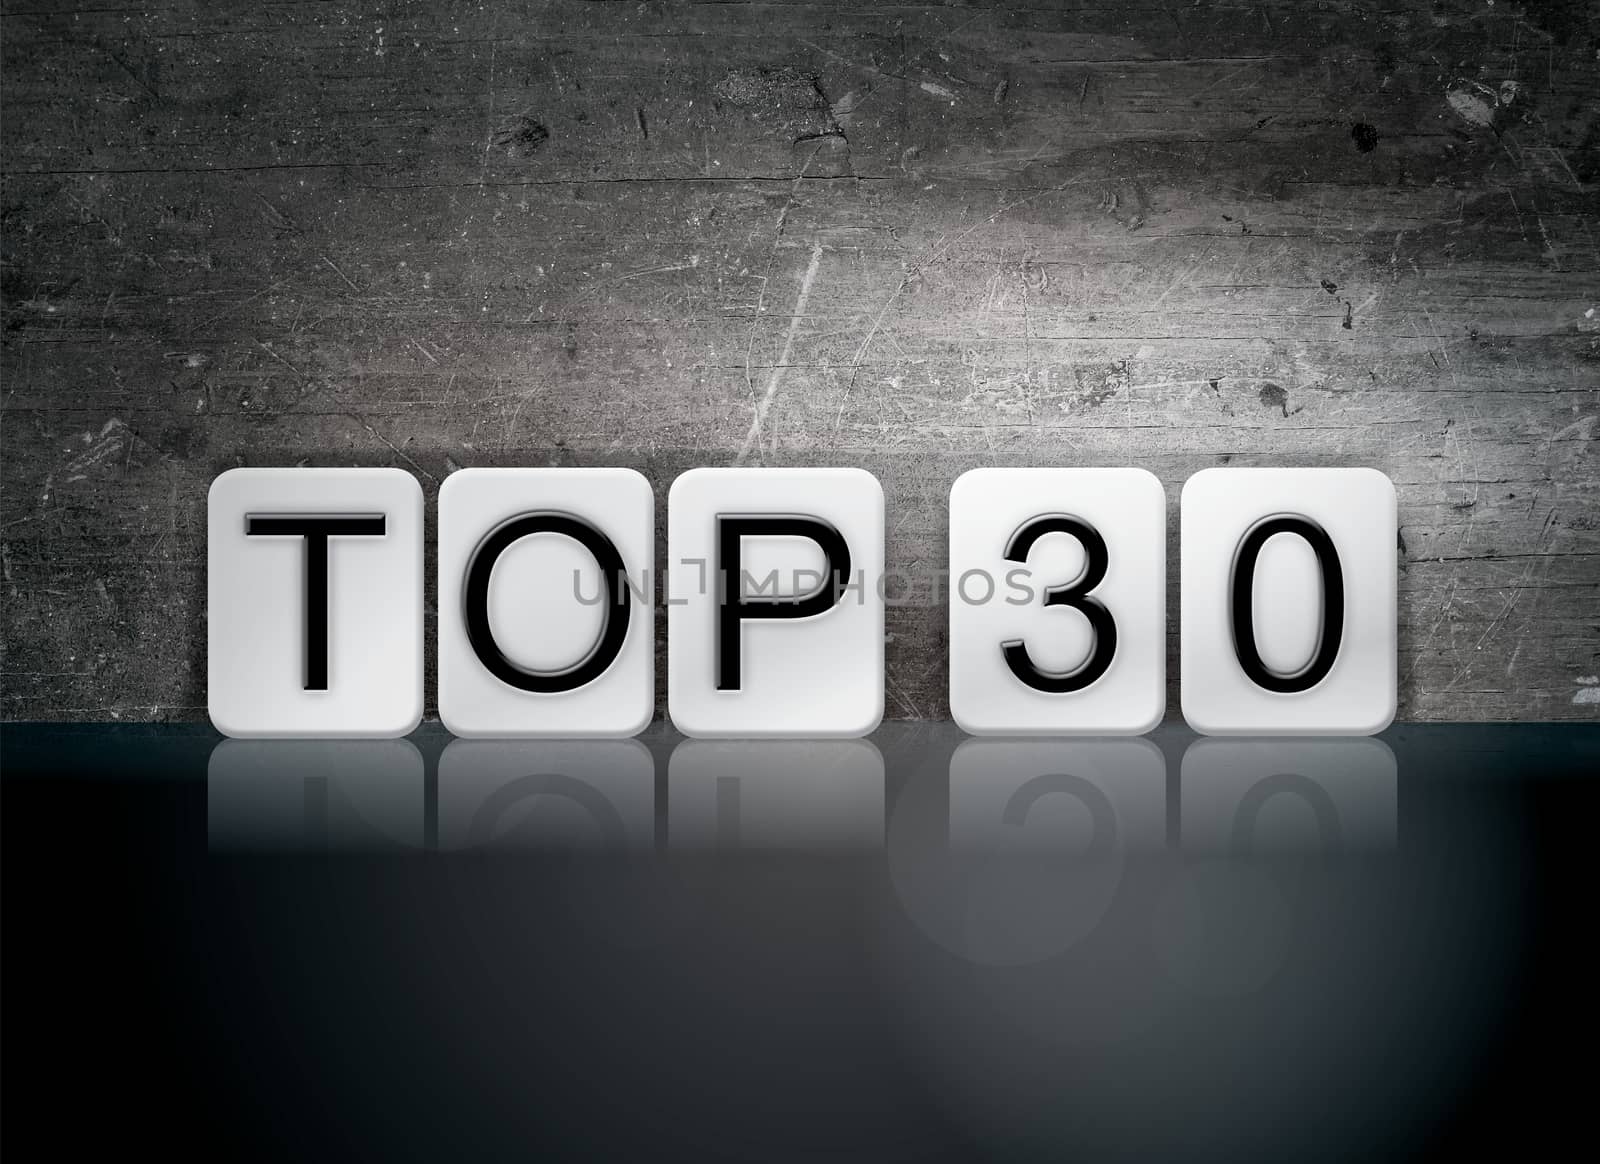 The word "Top 30" written in white tiles against a dark vintage grunge background.